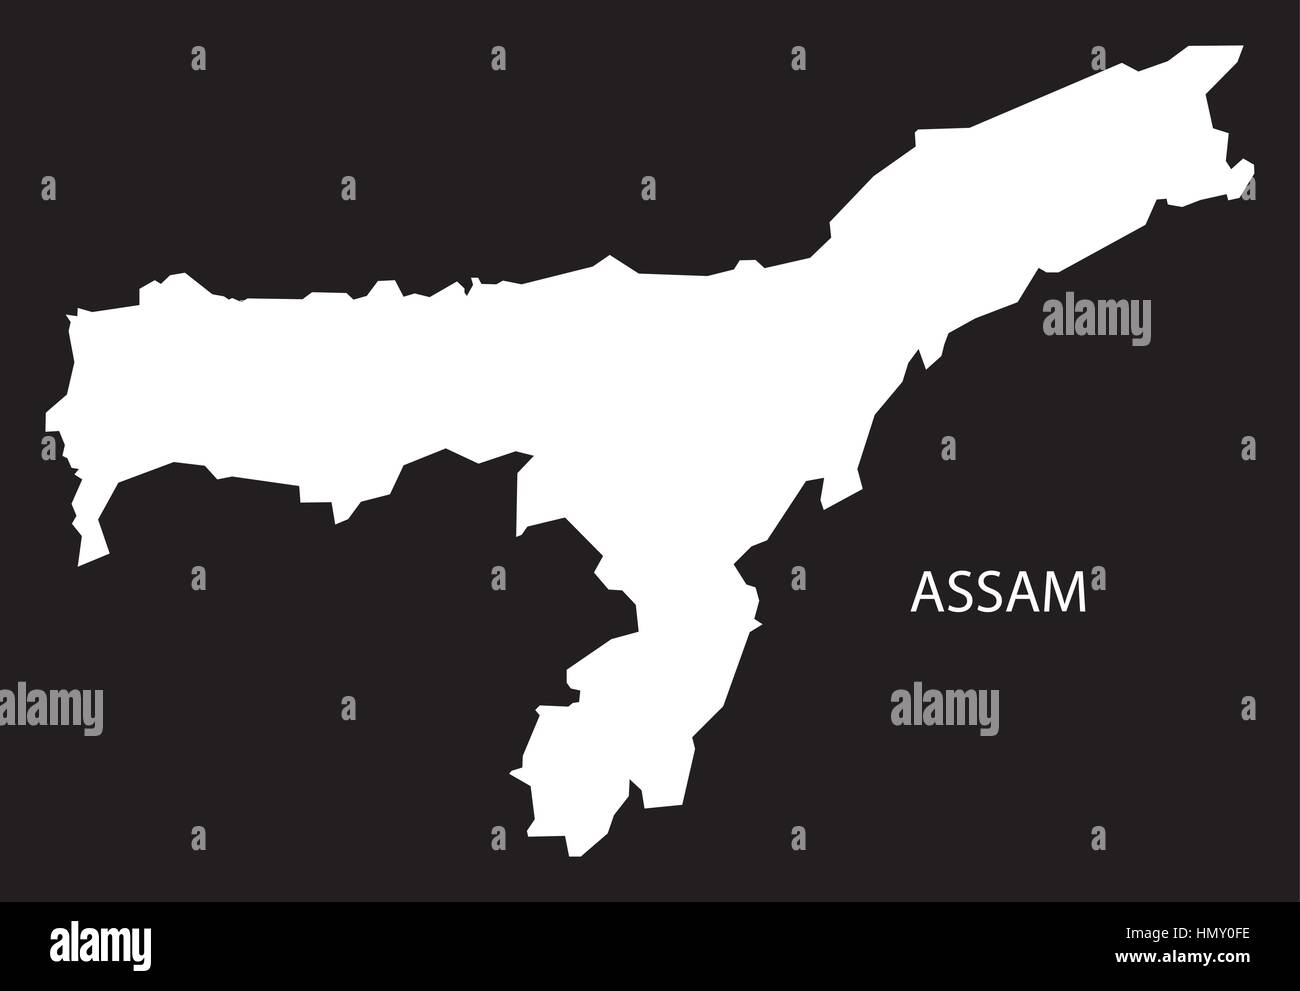 Assam Indien Karte schwarz invertiert silhouette Stock Vektor